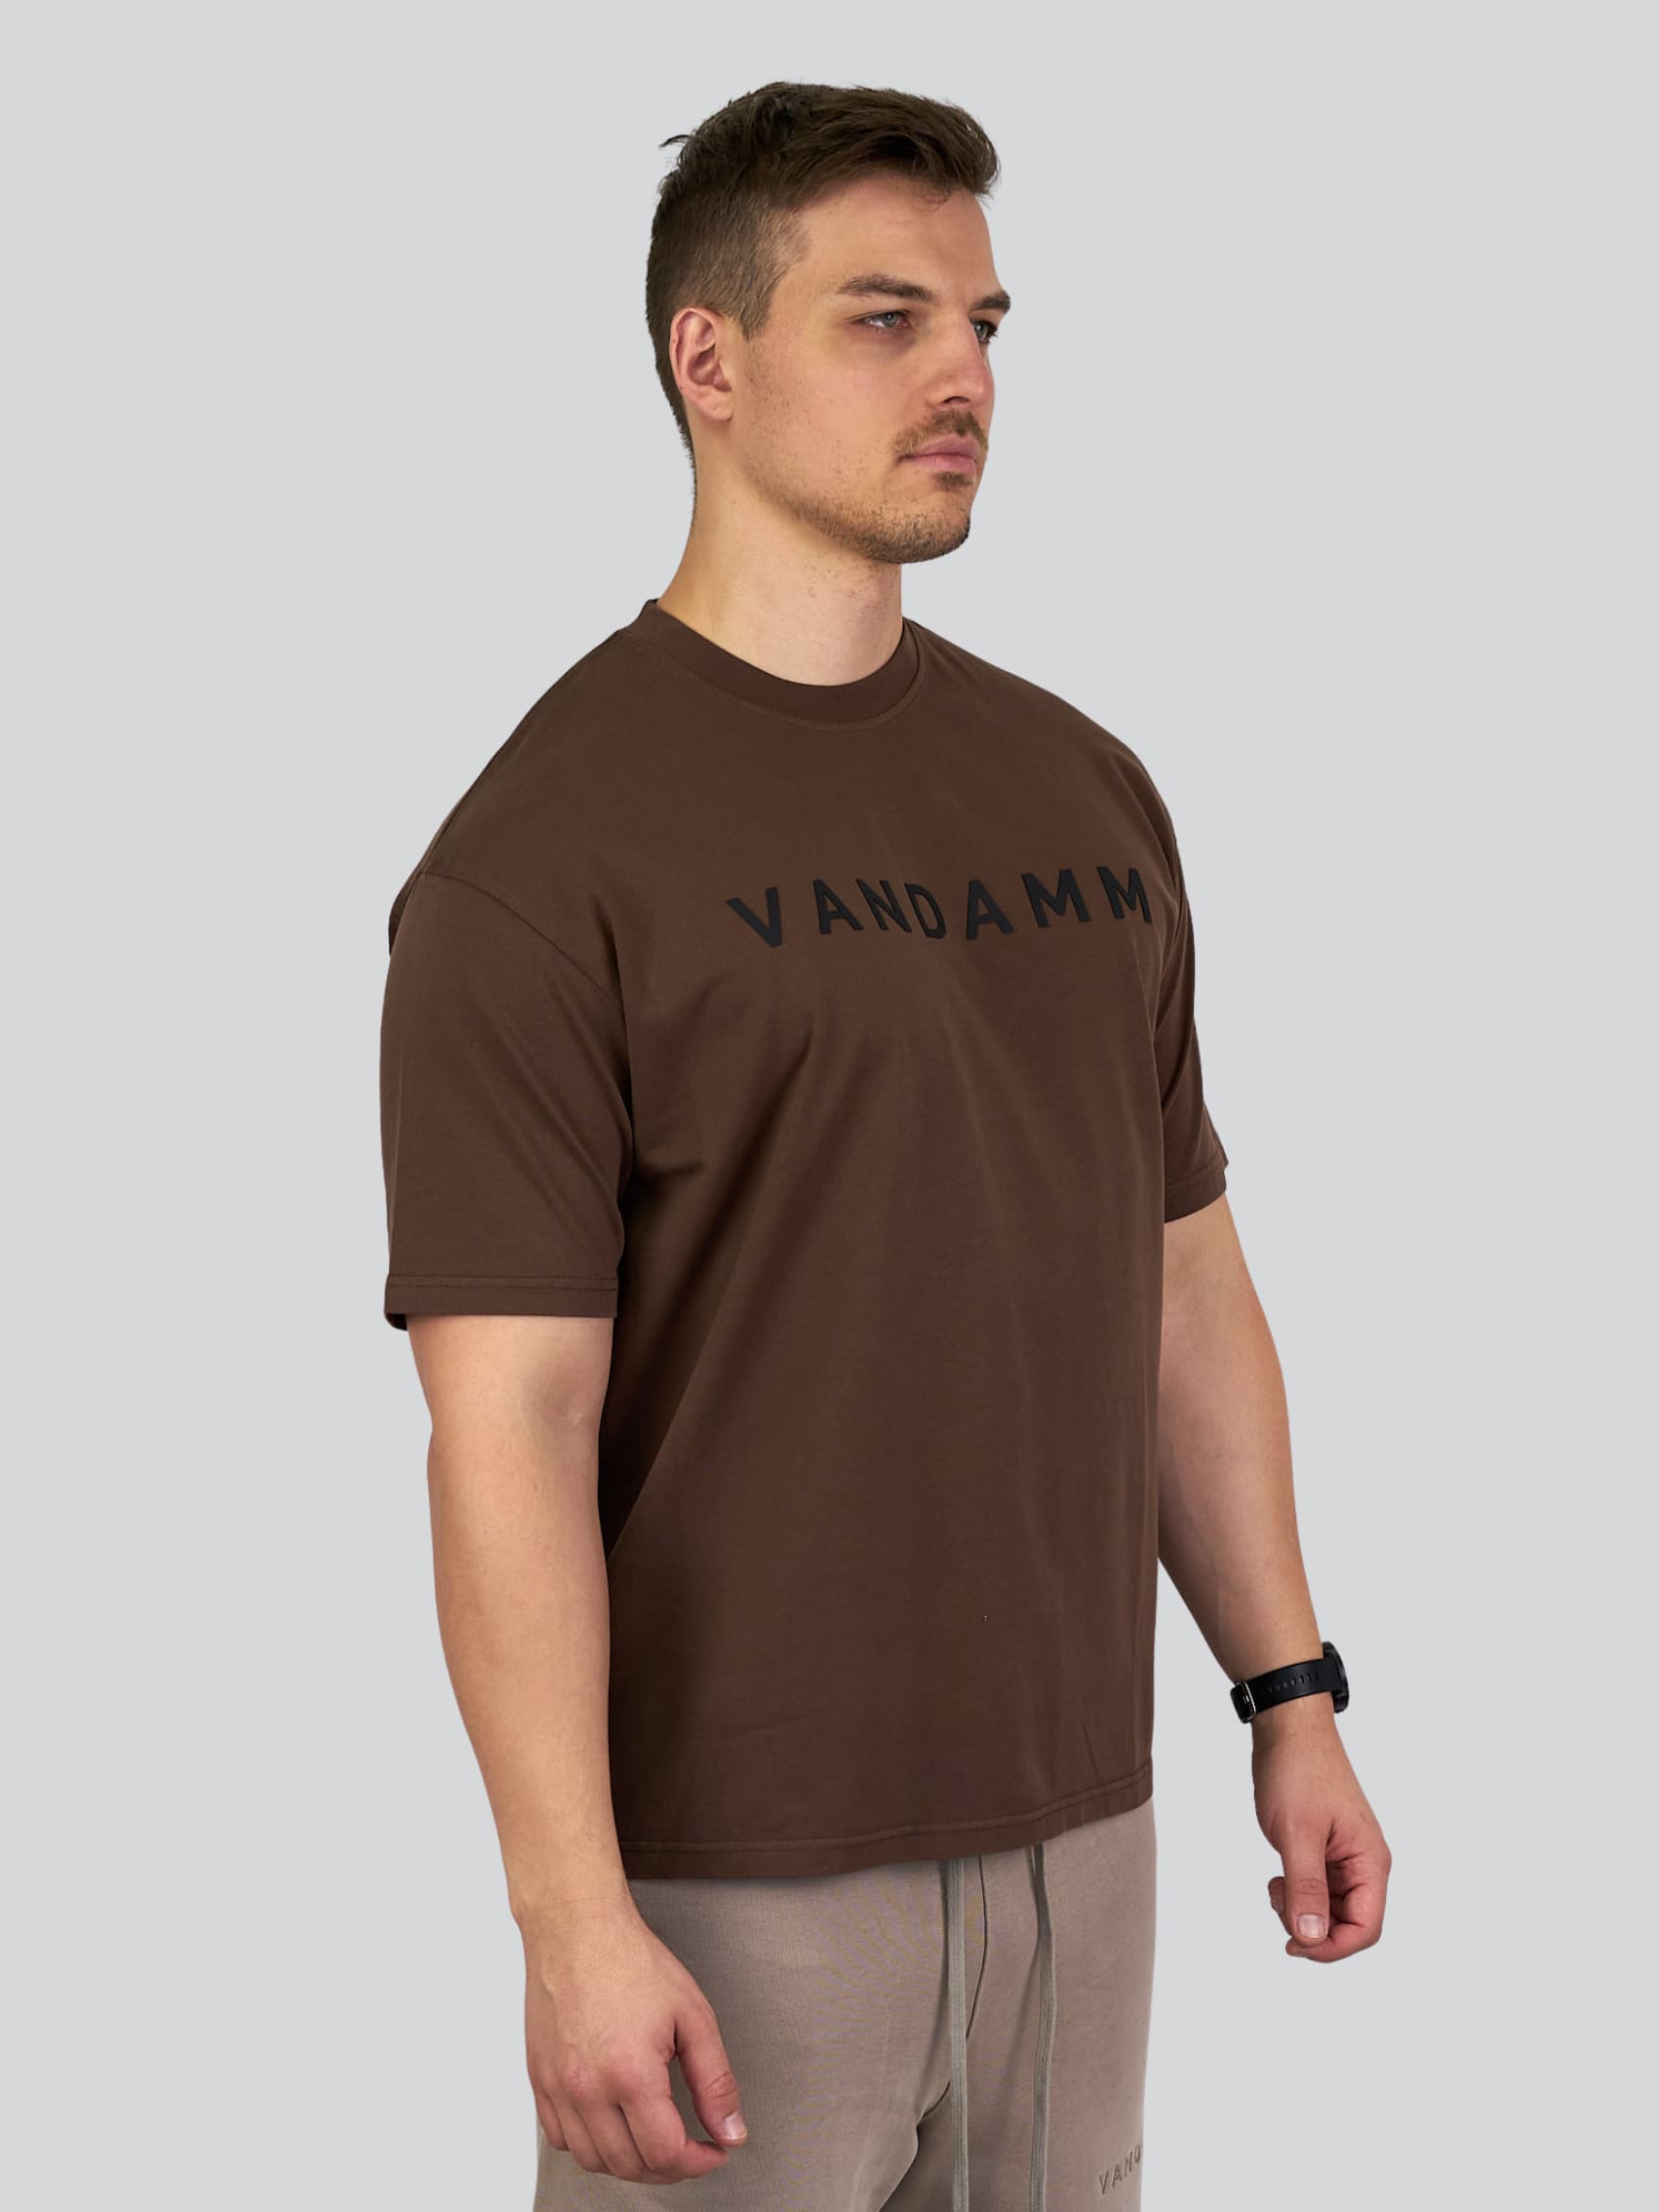 VANDAMM® Sportswear & Lifestyle T-Shirt Chocolate